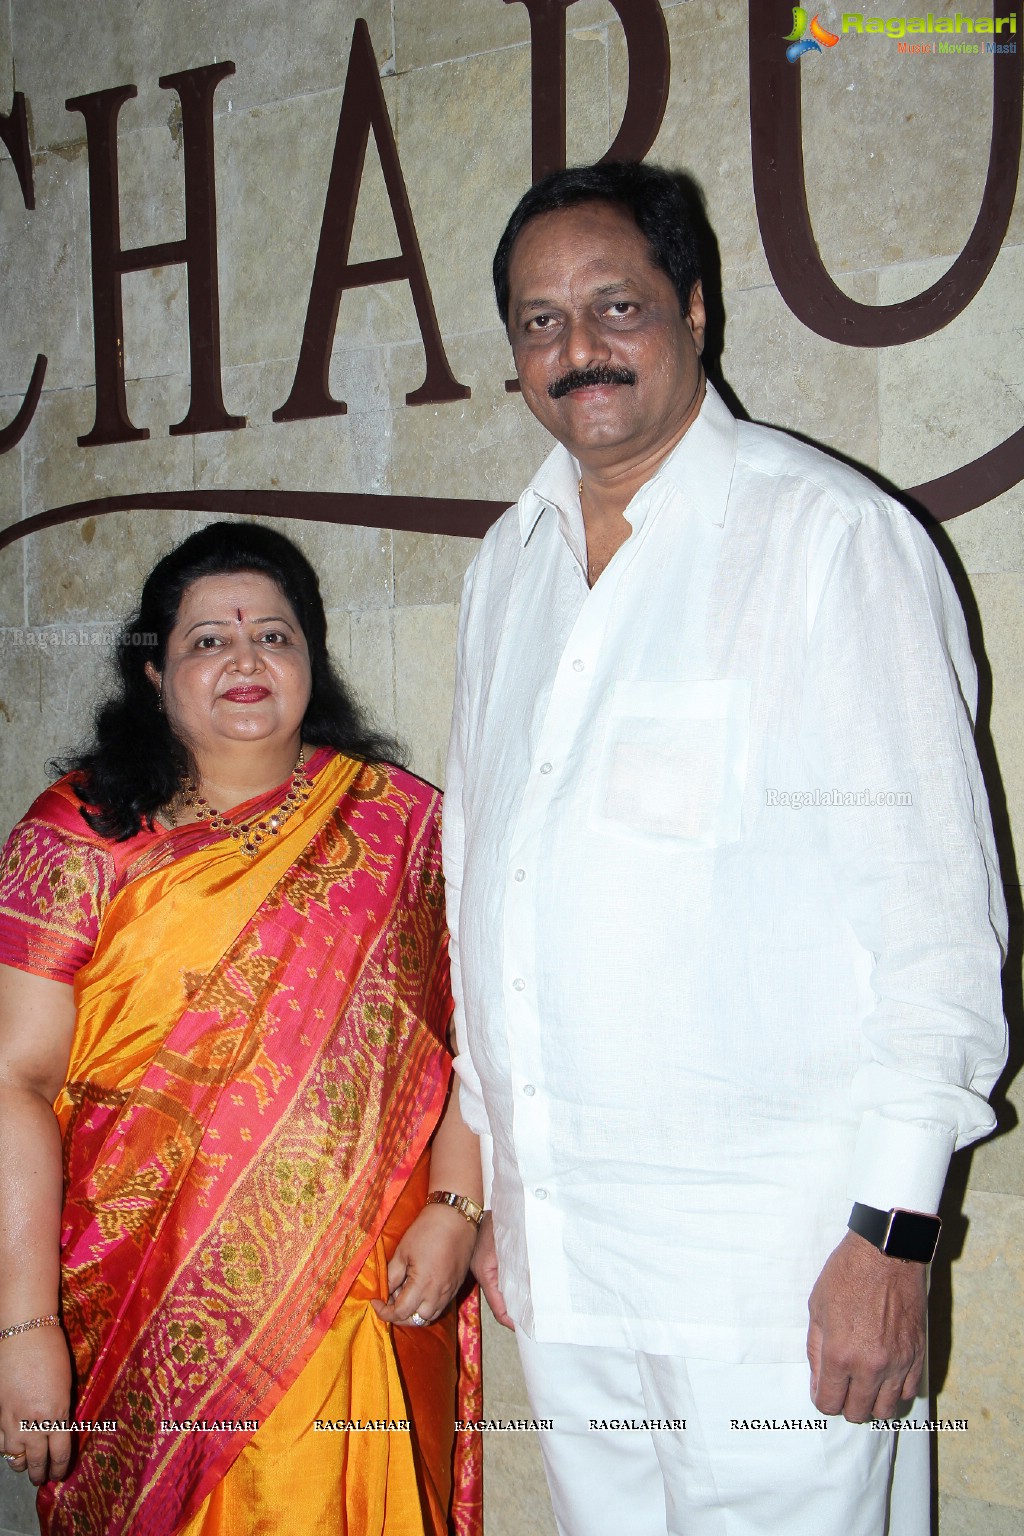 Wedding Anniversary of Ch. Vinay Kumar at Ulavacharu